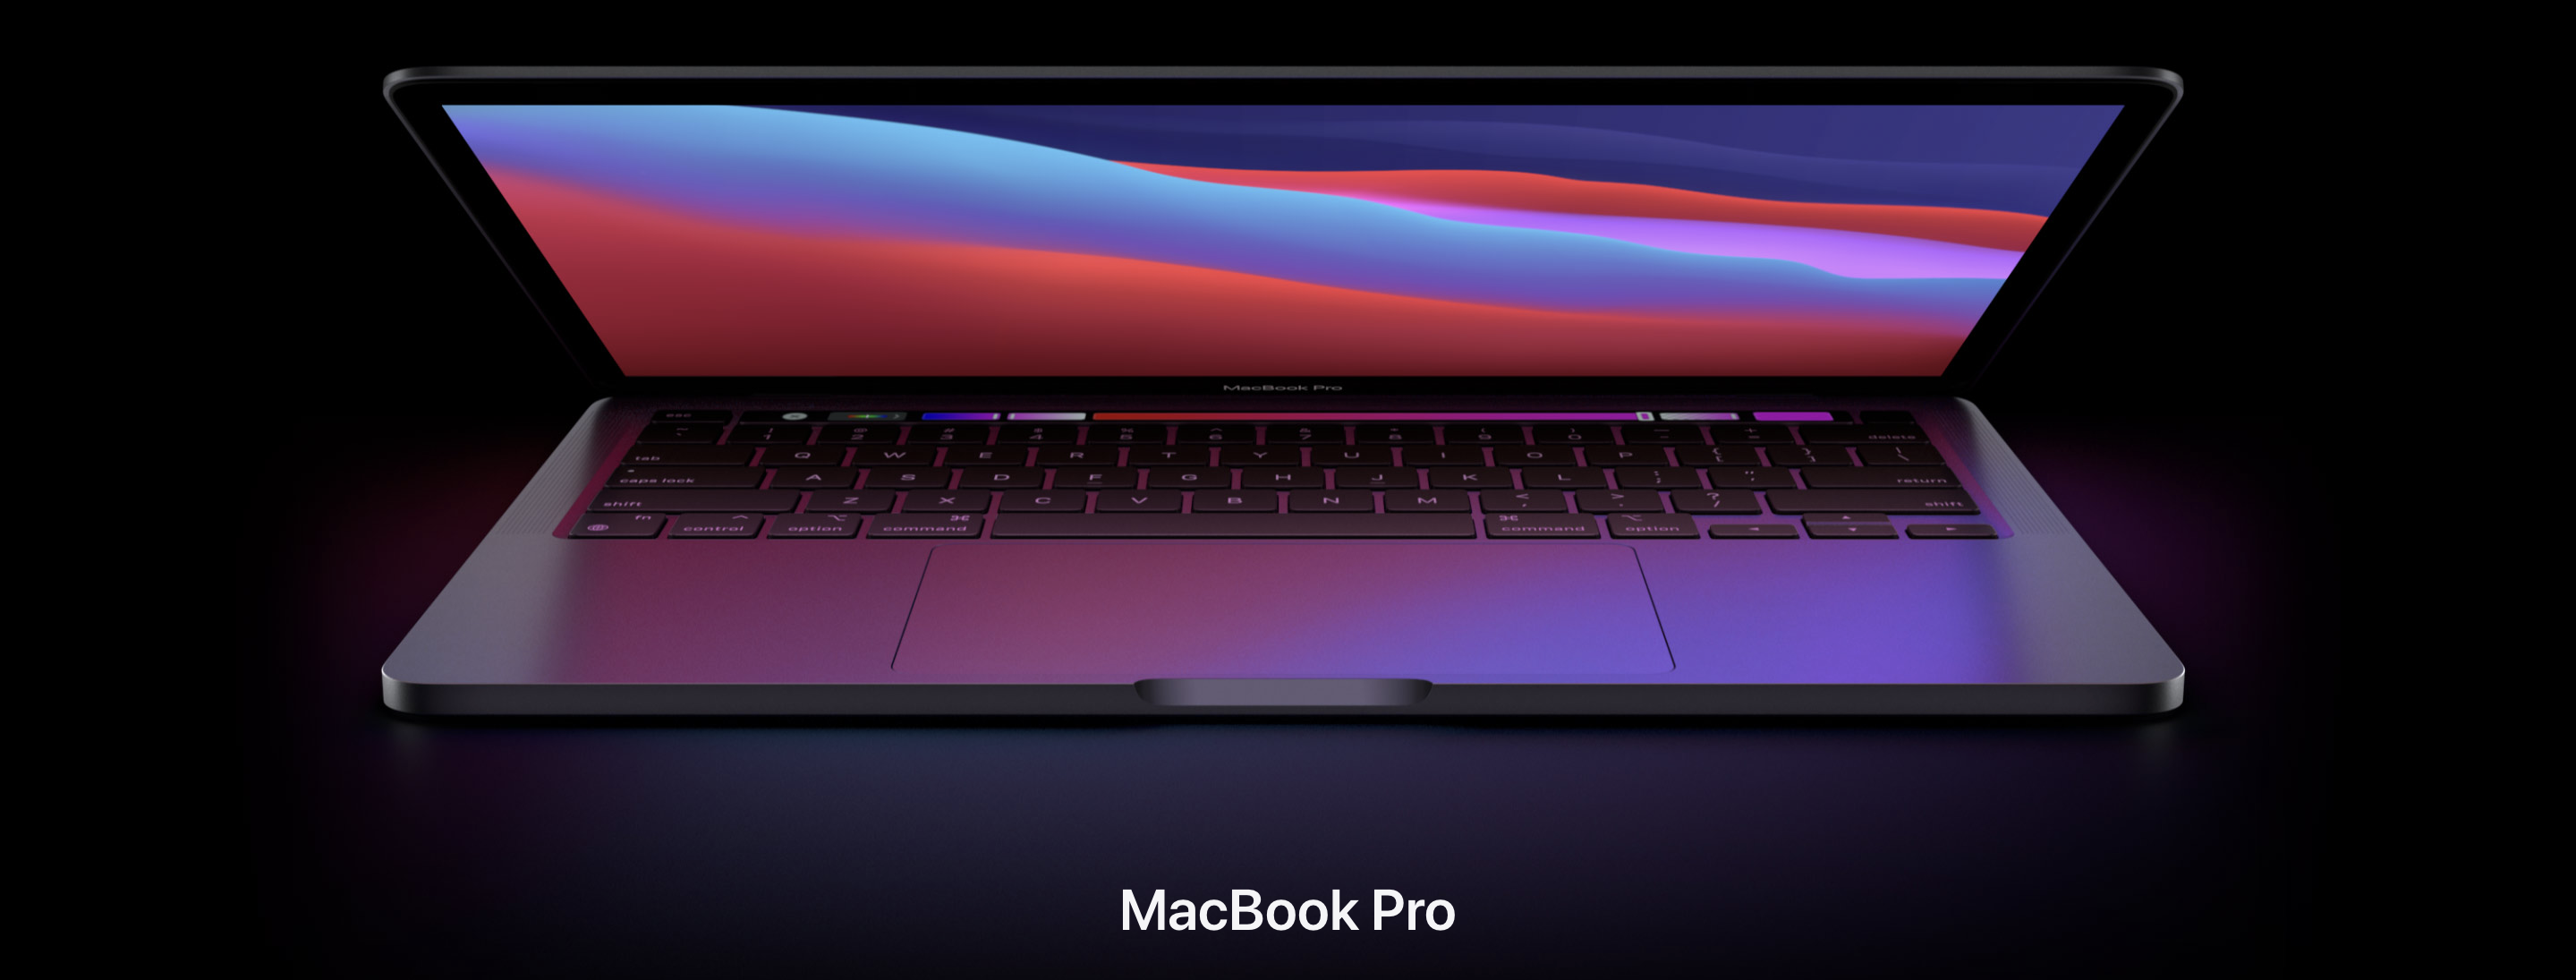 M1 Macbook Pro 13″ Review (2020)